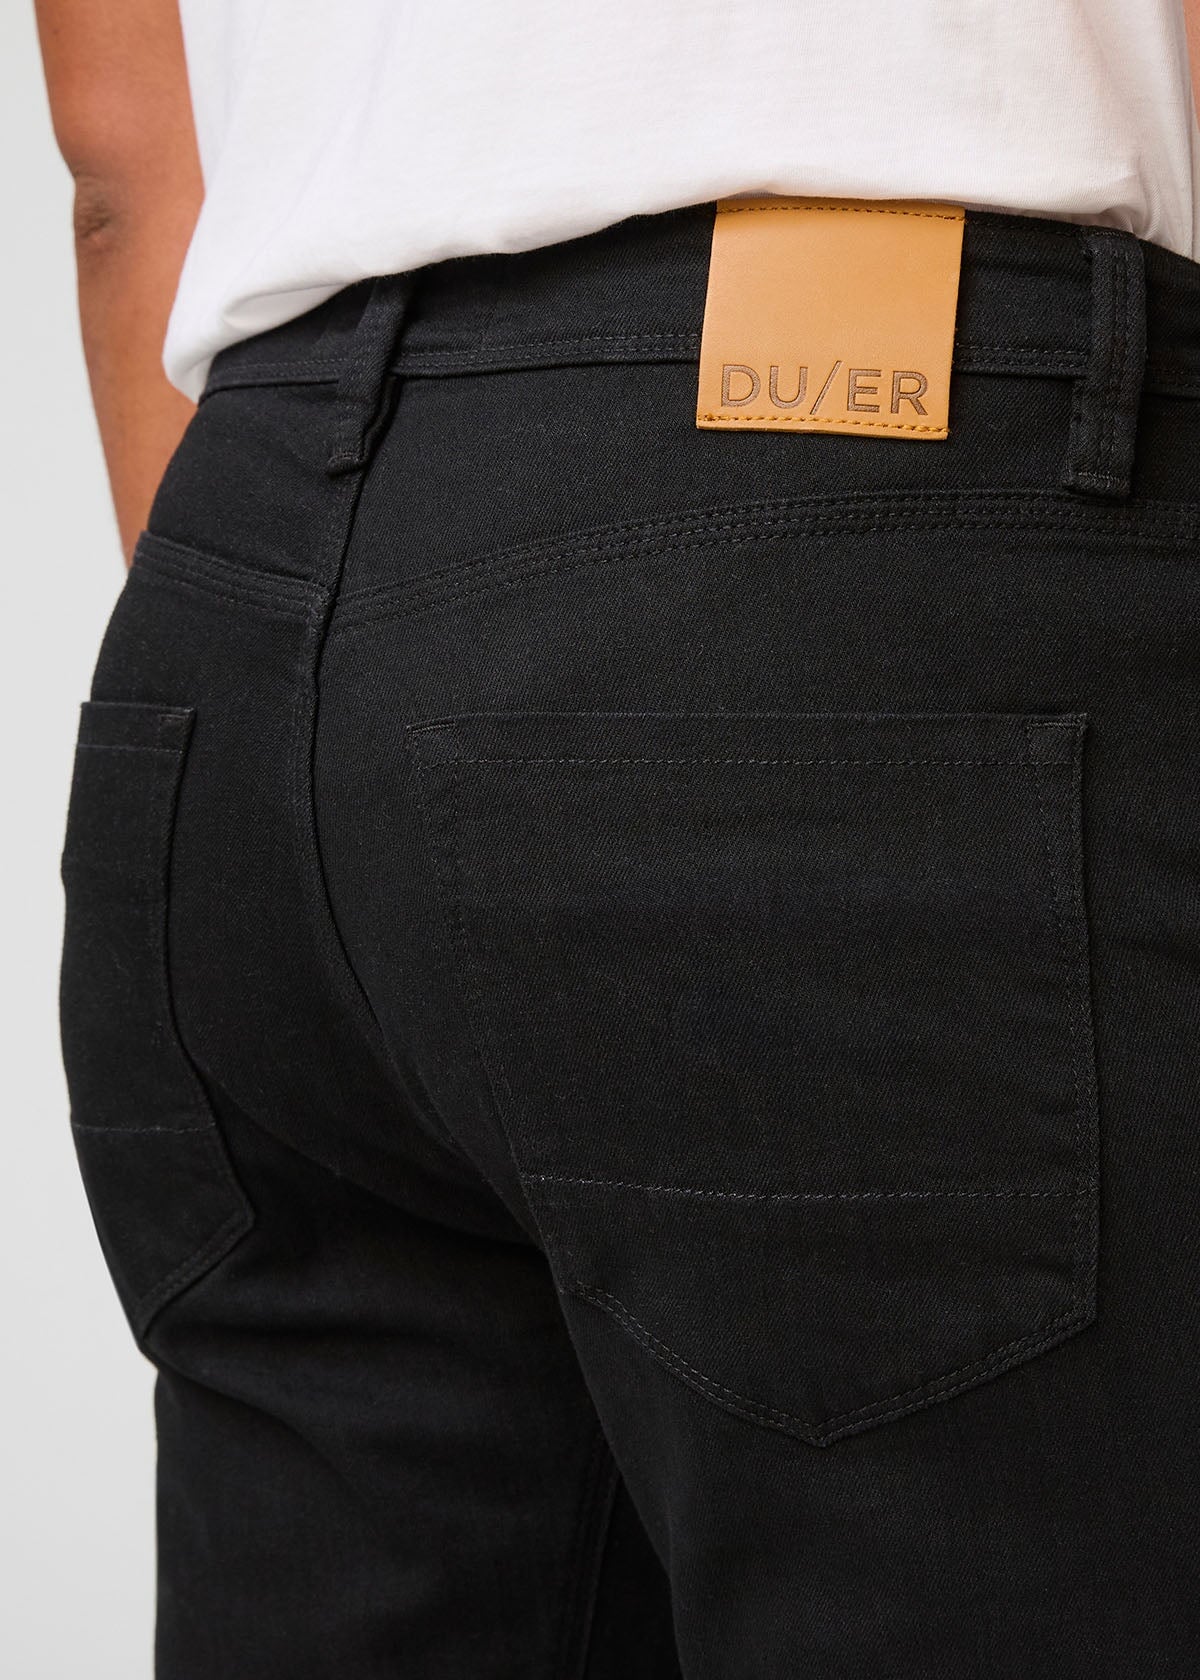 Men's Five Pocket Pants: Tall Dylan Slim Fit Black Pants – American Tall